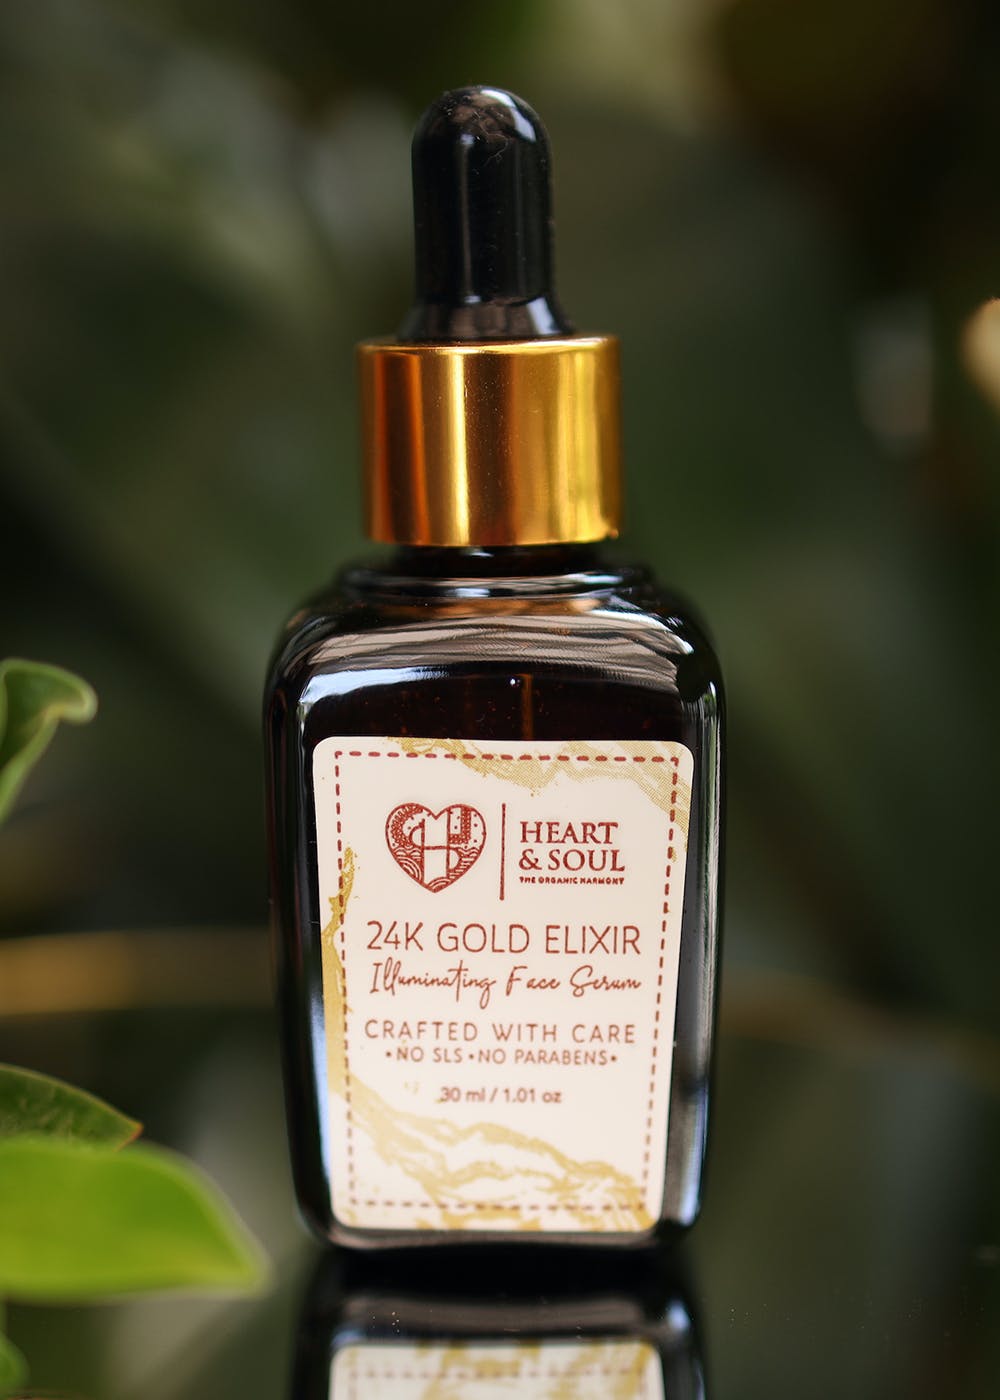 24k Gold Elixir Illuminating Face Serum - 30 ml